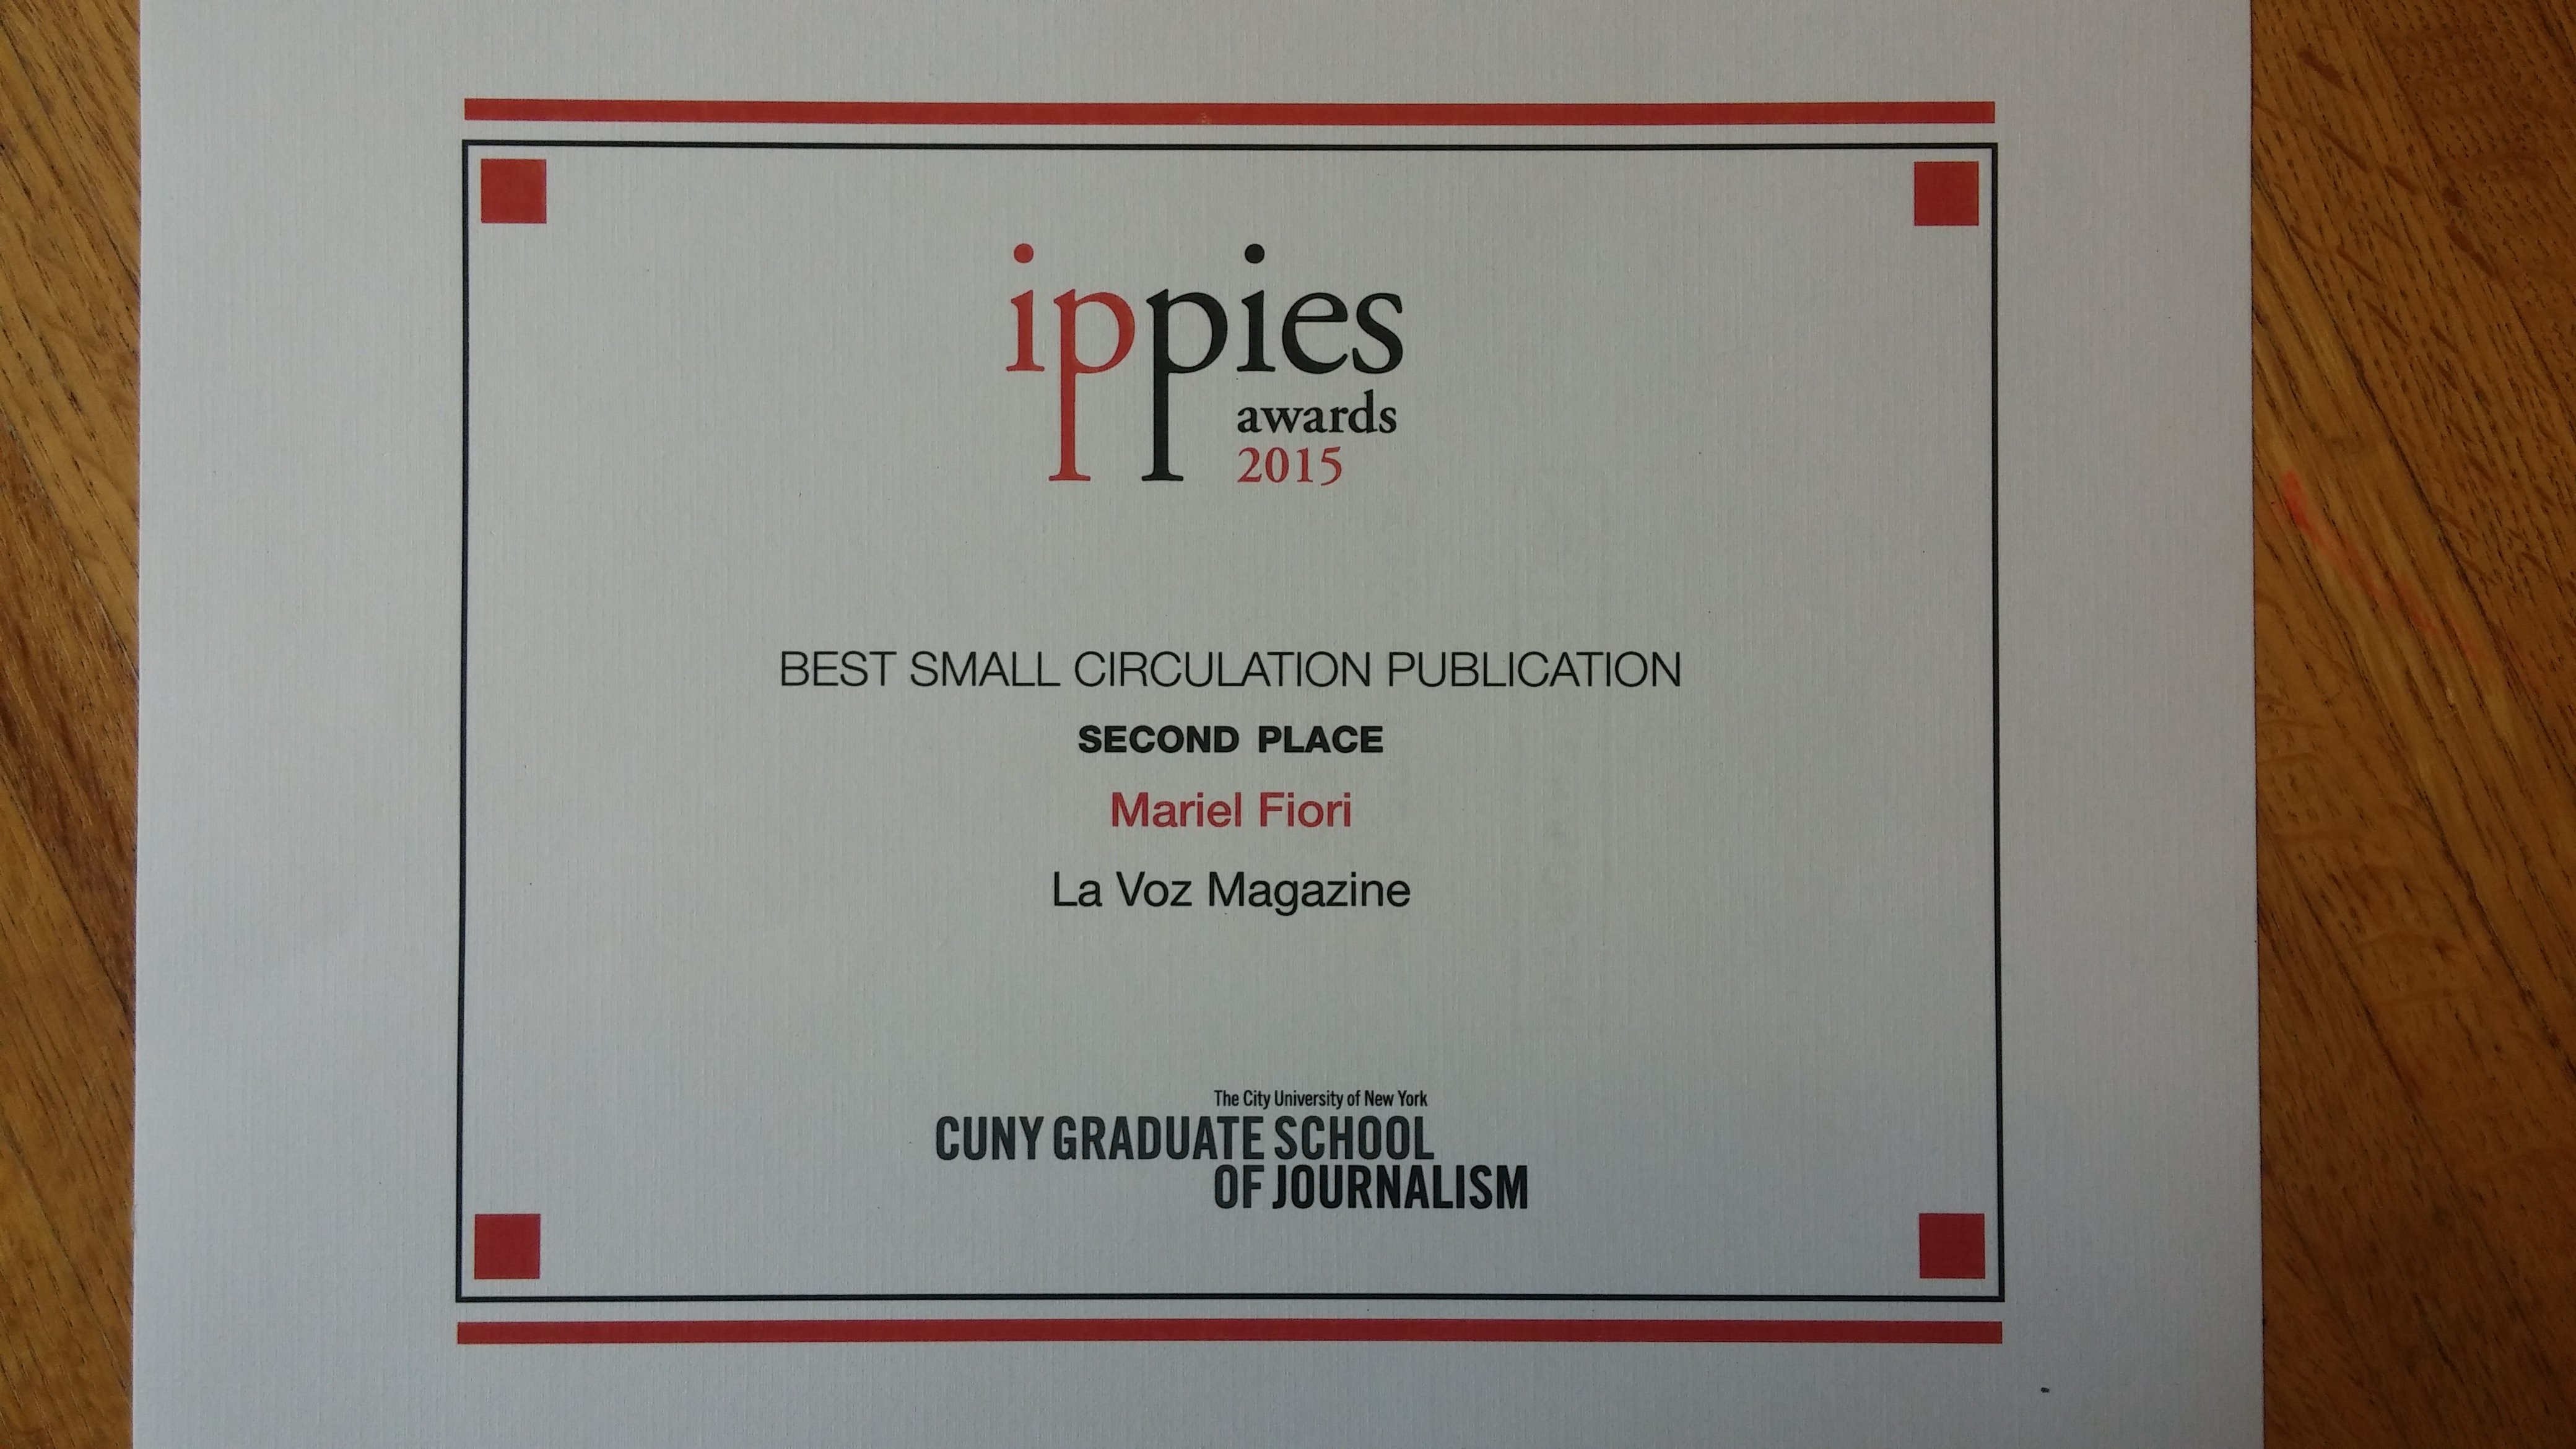  And an Ippie award goes to La Voz magazine!